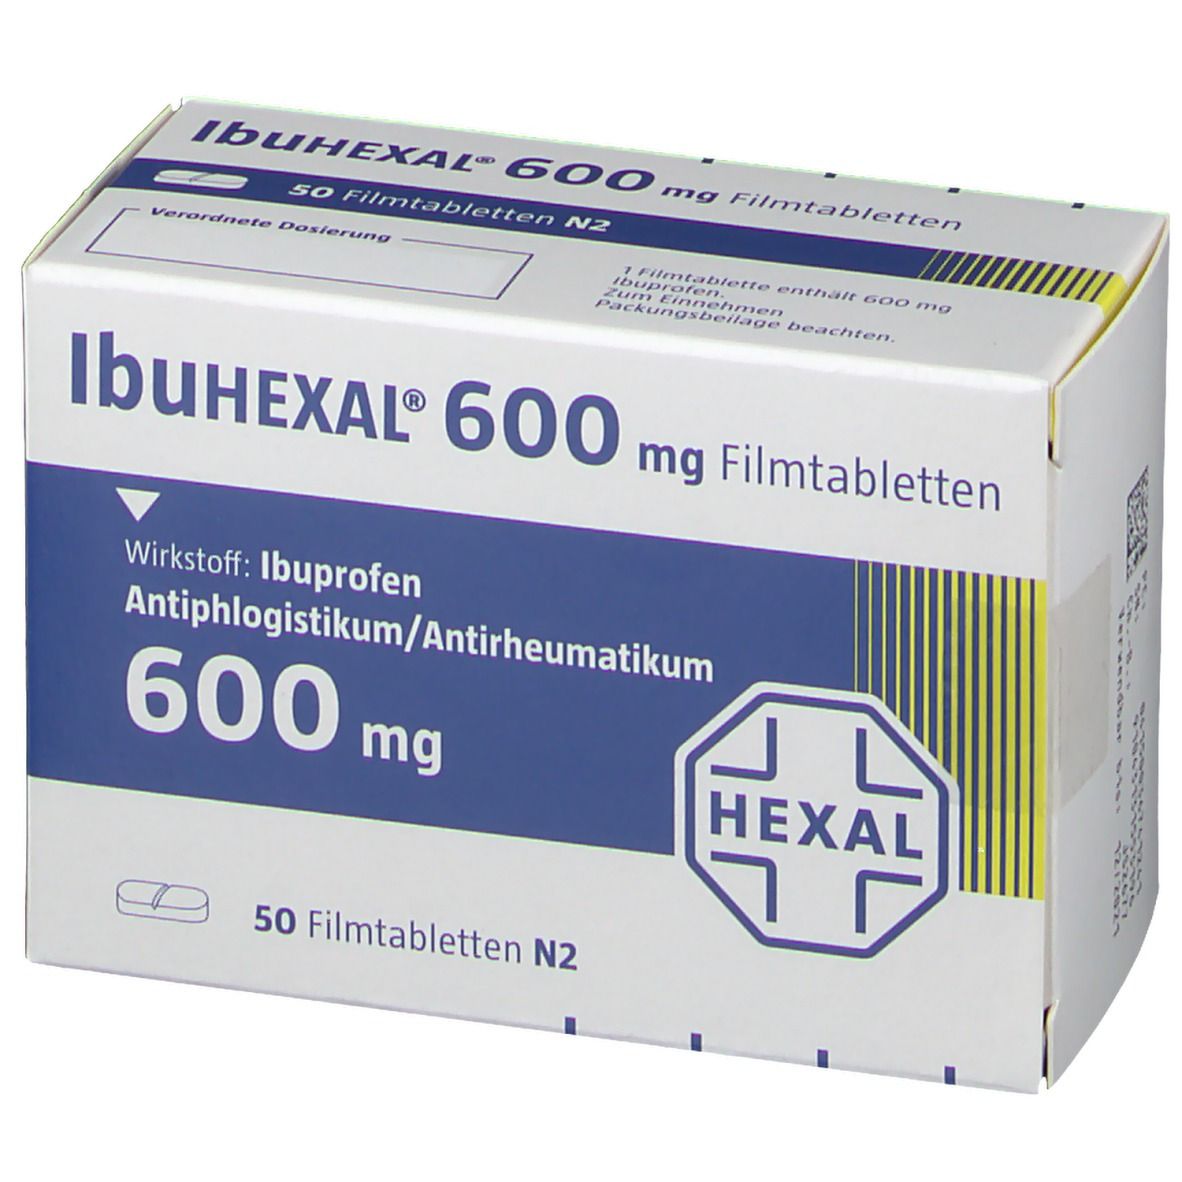 IbuHEXAL® 600 mg